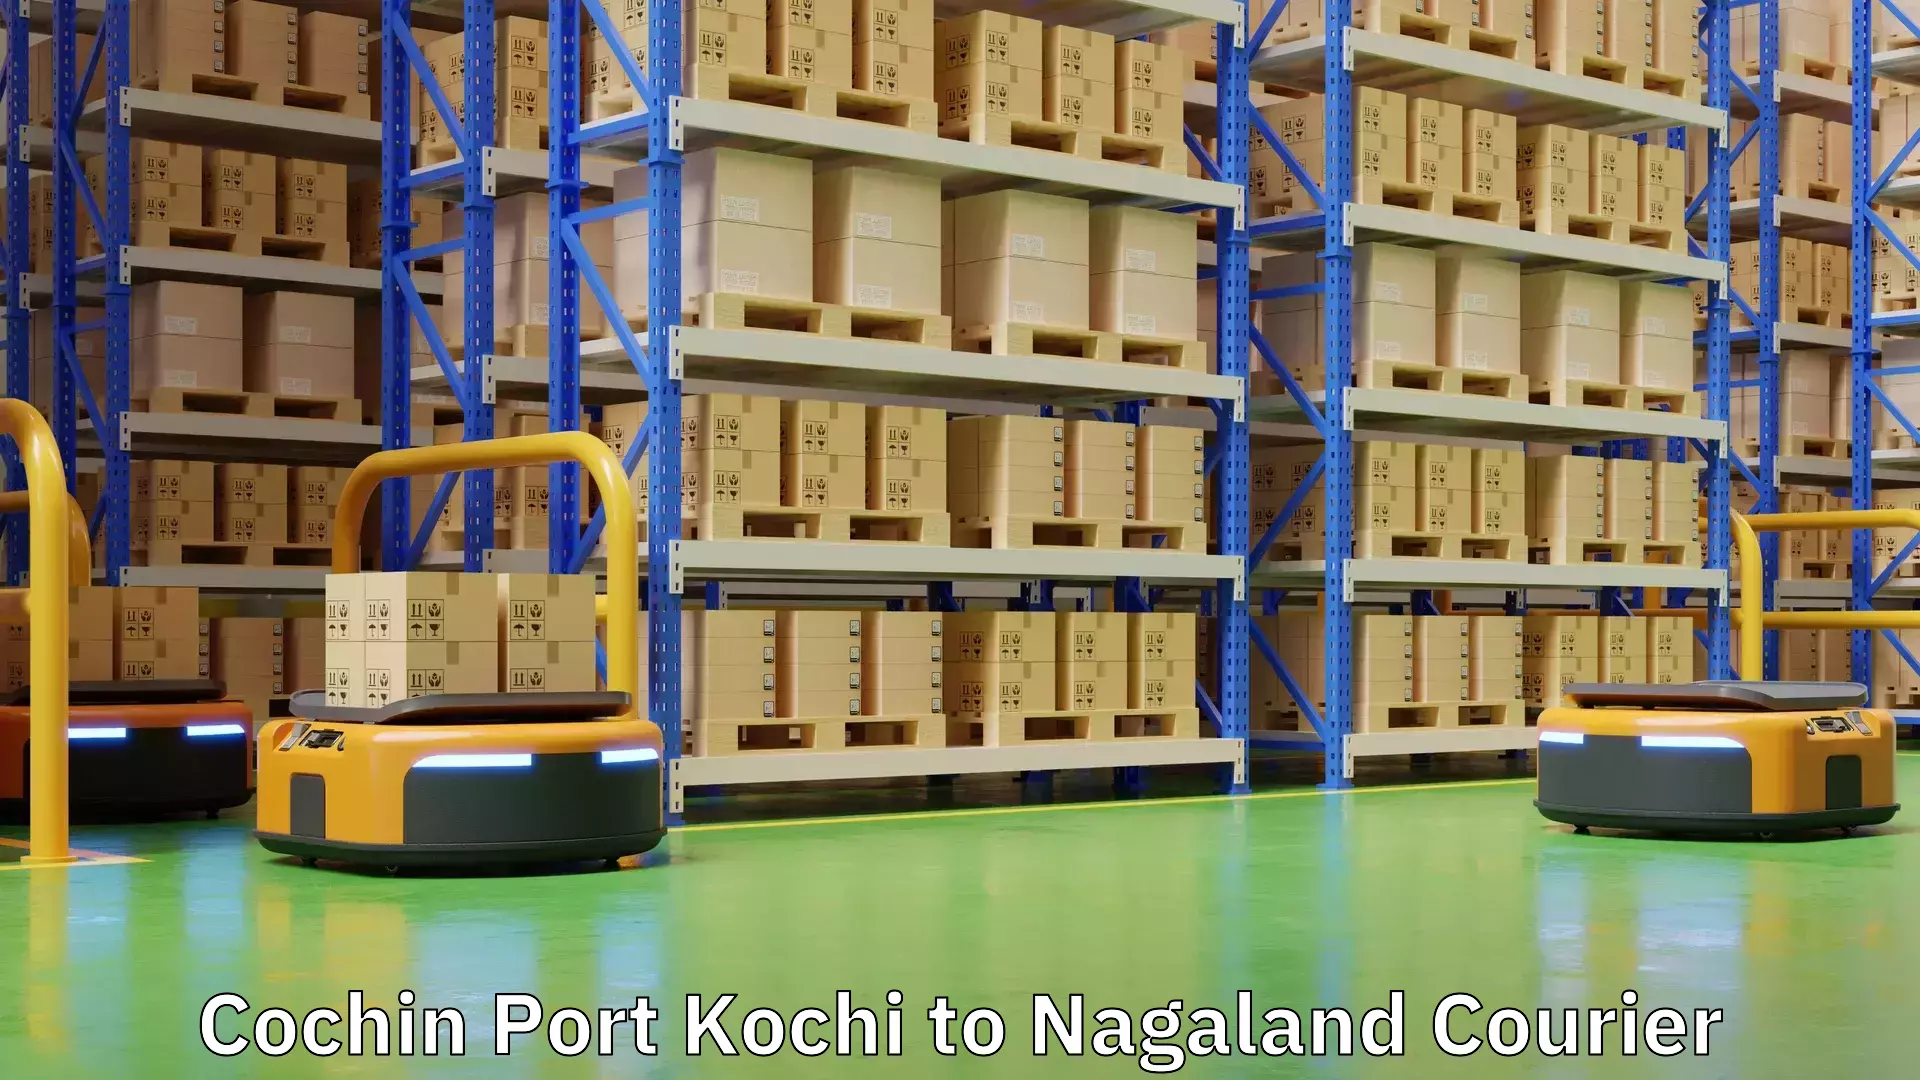 24/7 courier service Cochin Port Kochi to Nagaland